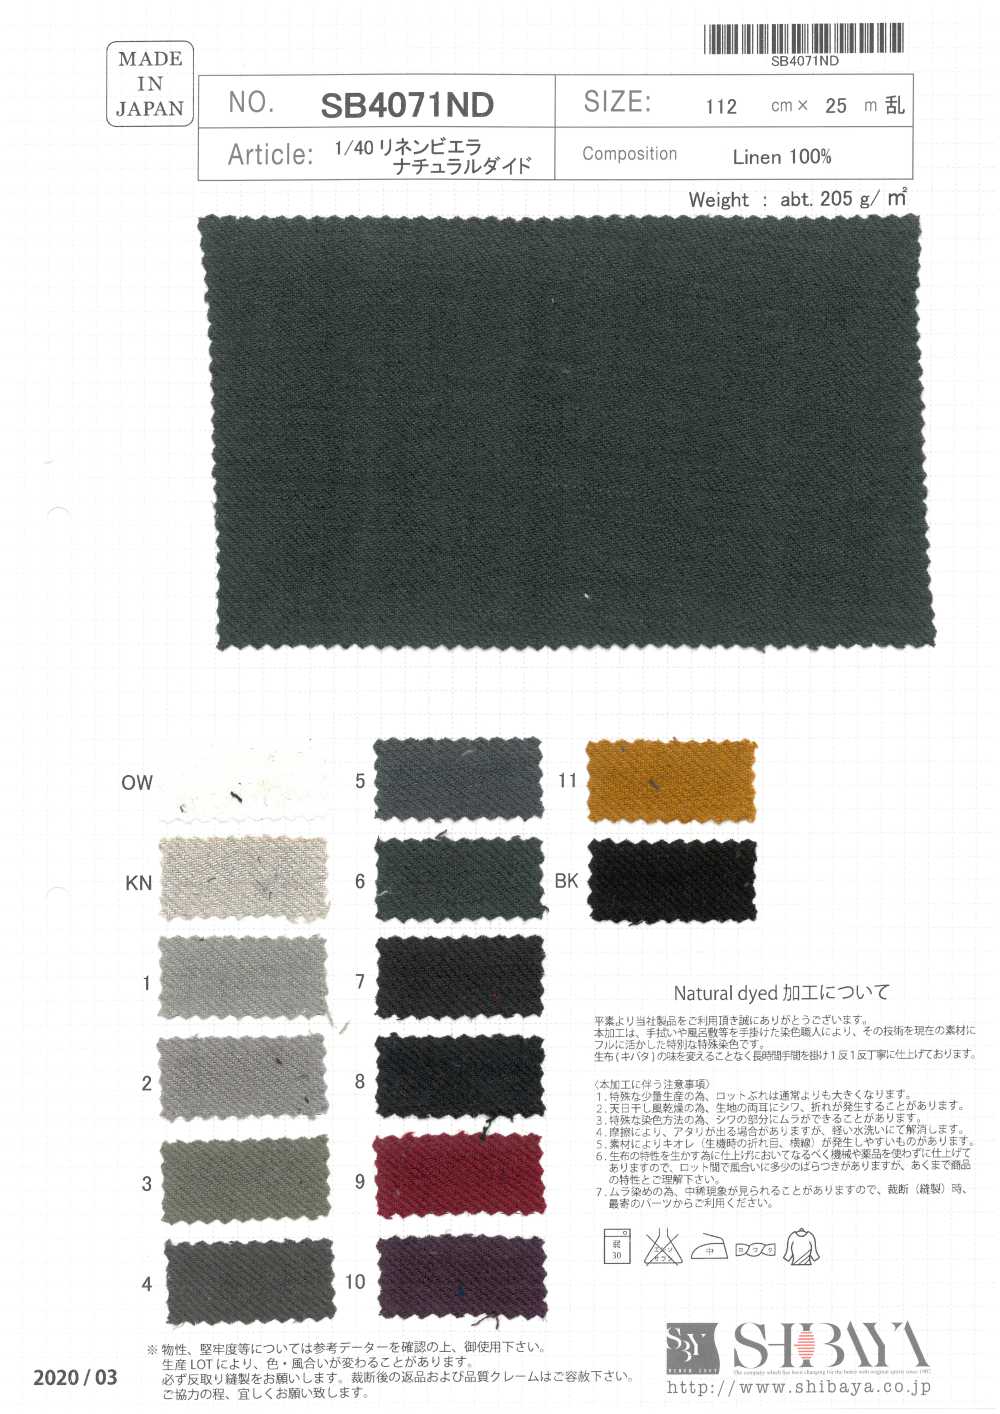 SB4071ND 1/40 Viyella Naturgefärbt[Textilgewebe] SHIBAYA